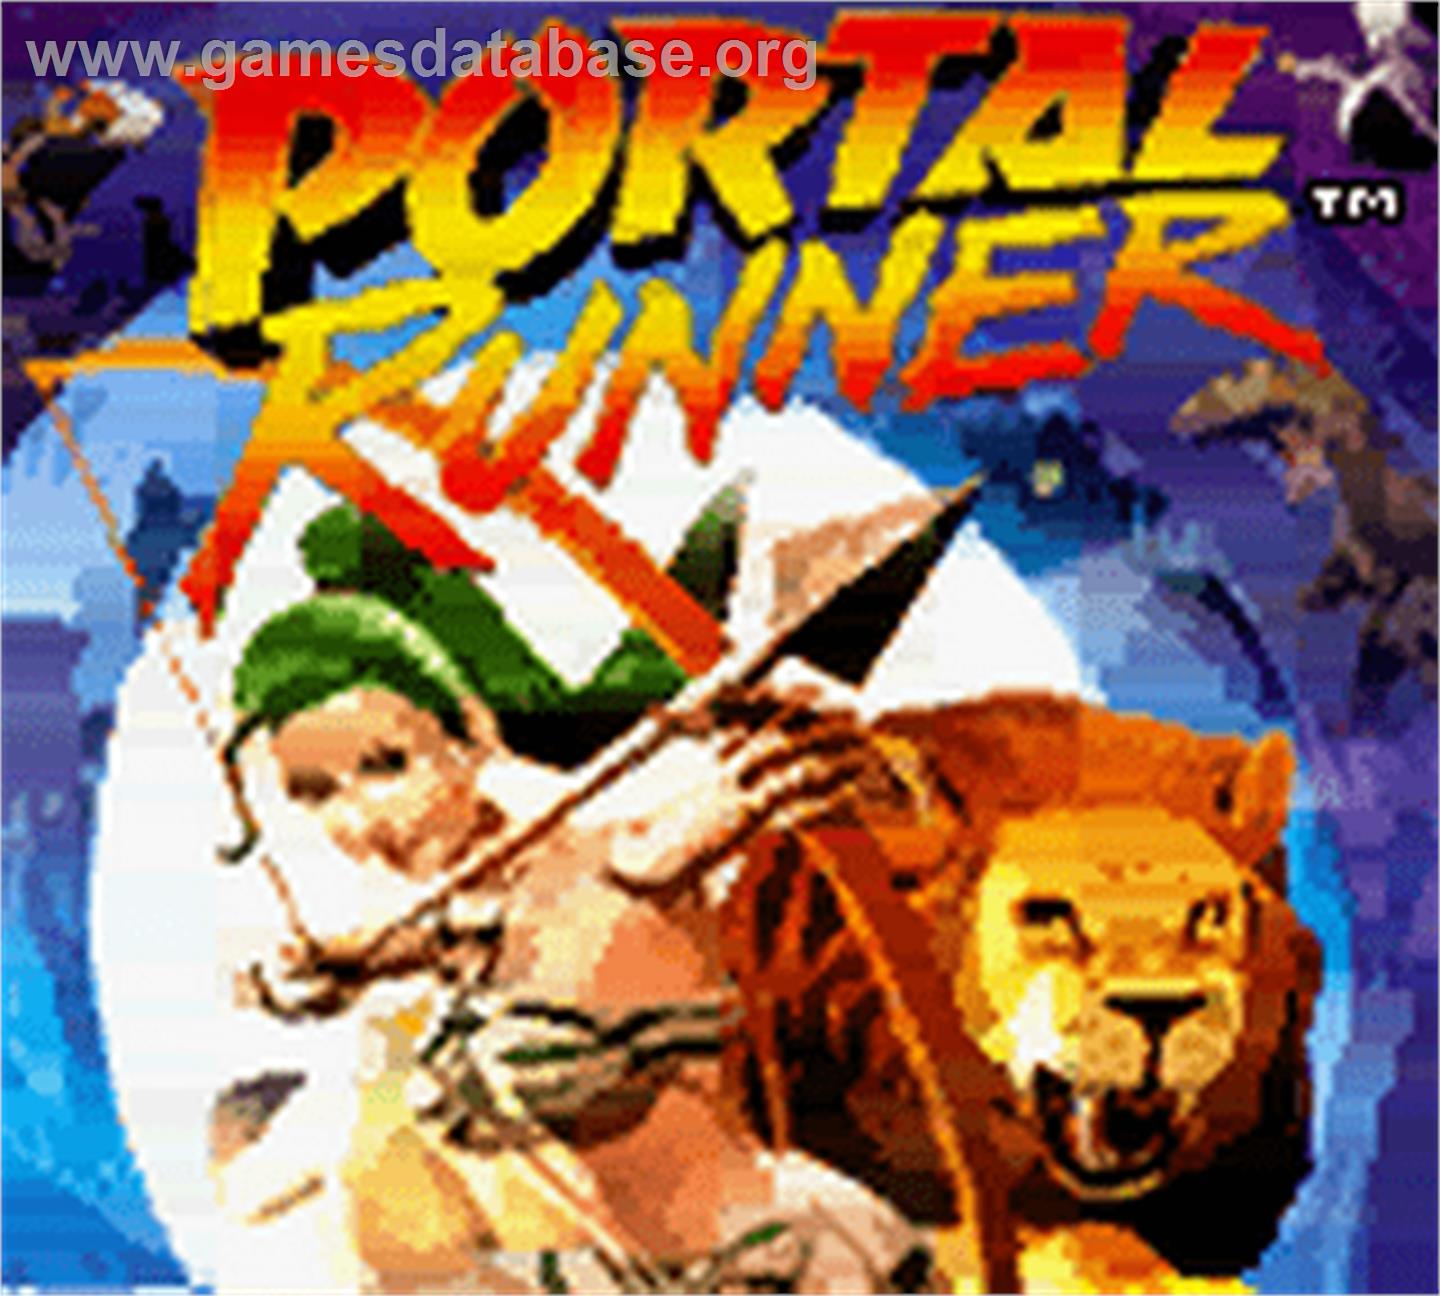 Portal Runner - Nintendo Game Boy Color - Artwork - Title Screen